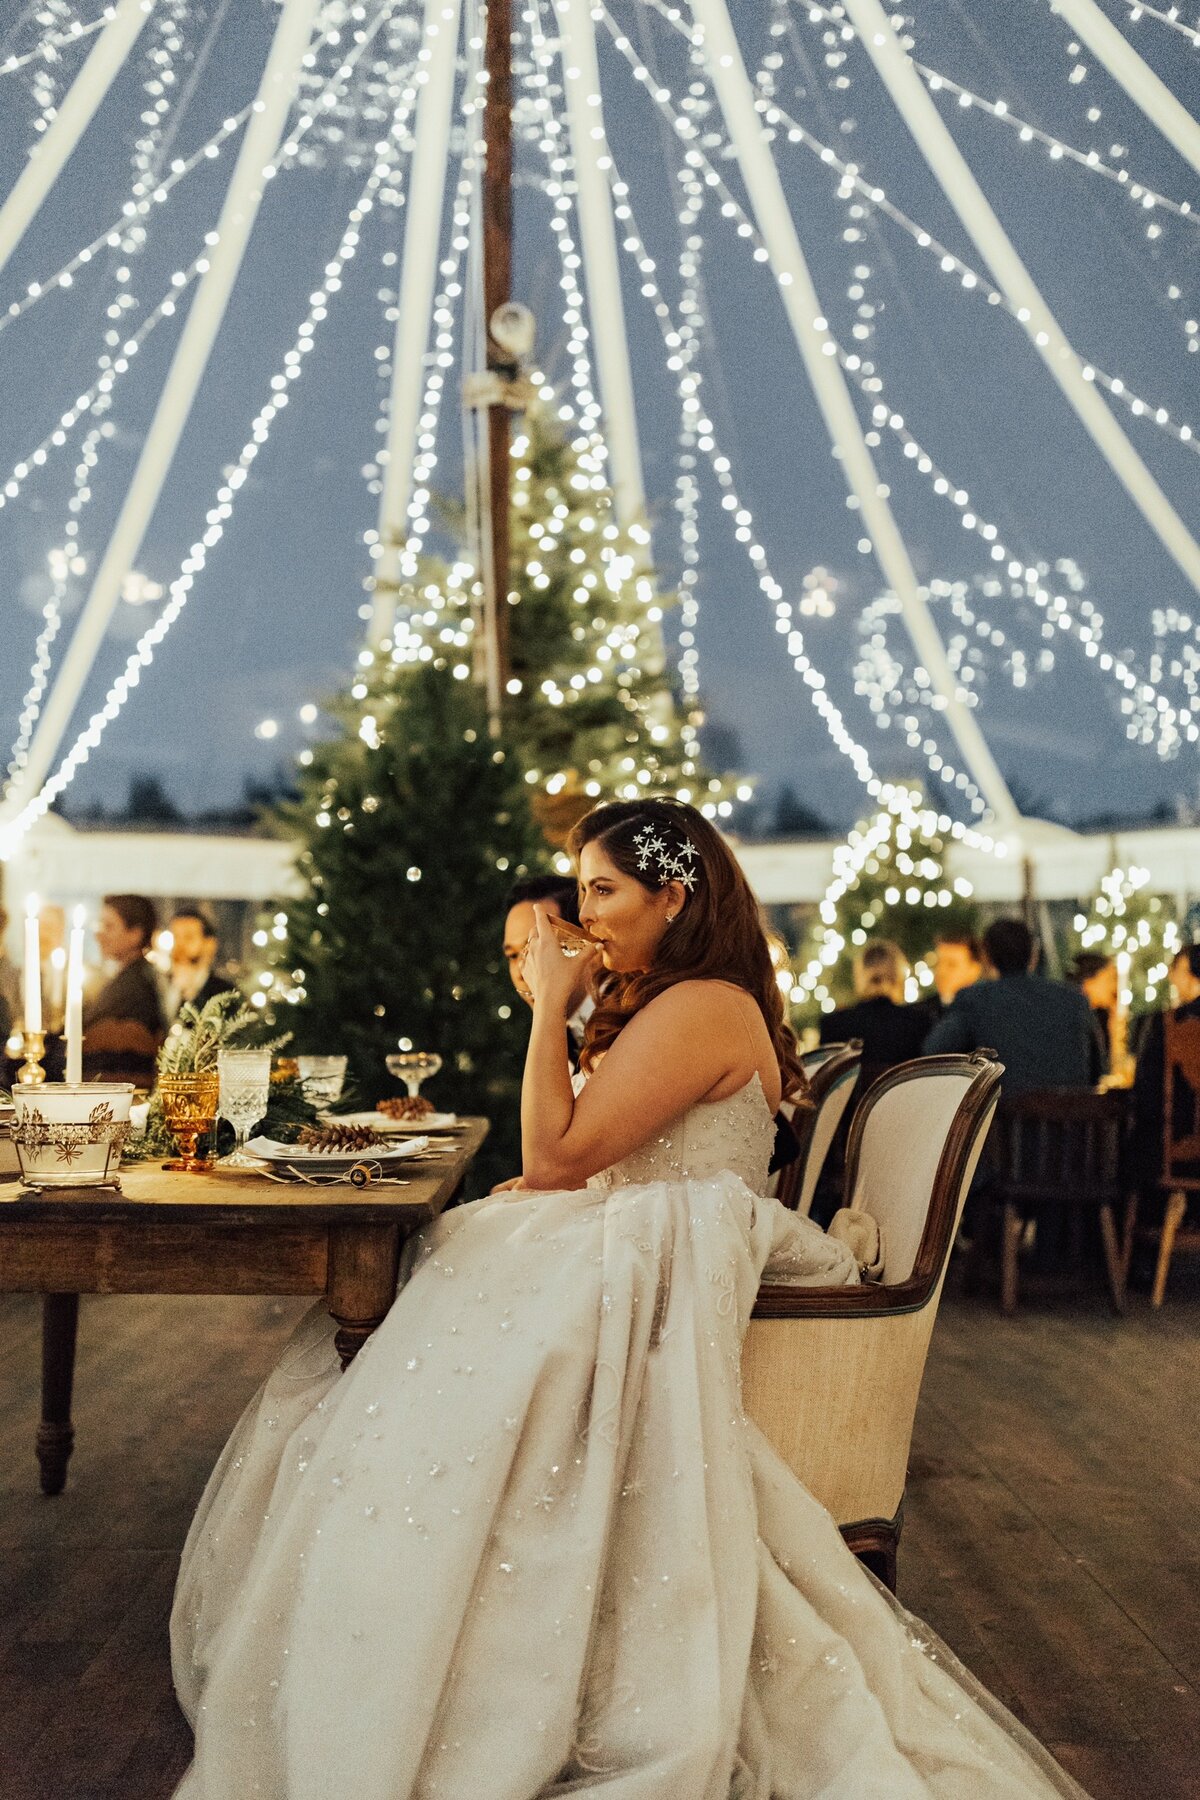 Christy-l-Johnston-Photography-Monica-Relyea-Events-Noelle-Downing-Instagram-Noelle_s-Favorite-Day-Wedding-Battenfelds-Christmas-tree-farm-Red-Hook-New-York-Hudson-Valley-upstate-november-2019-IMG_6641